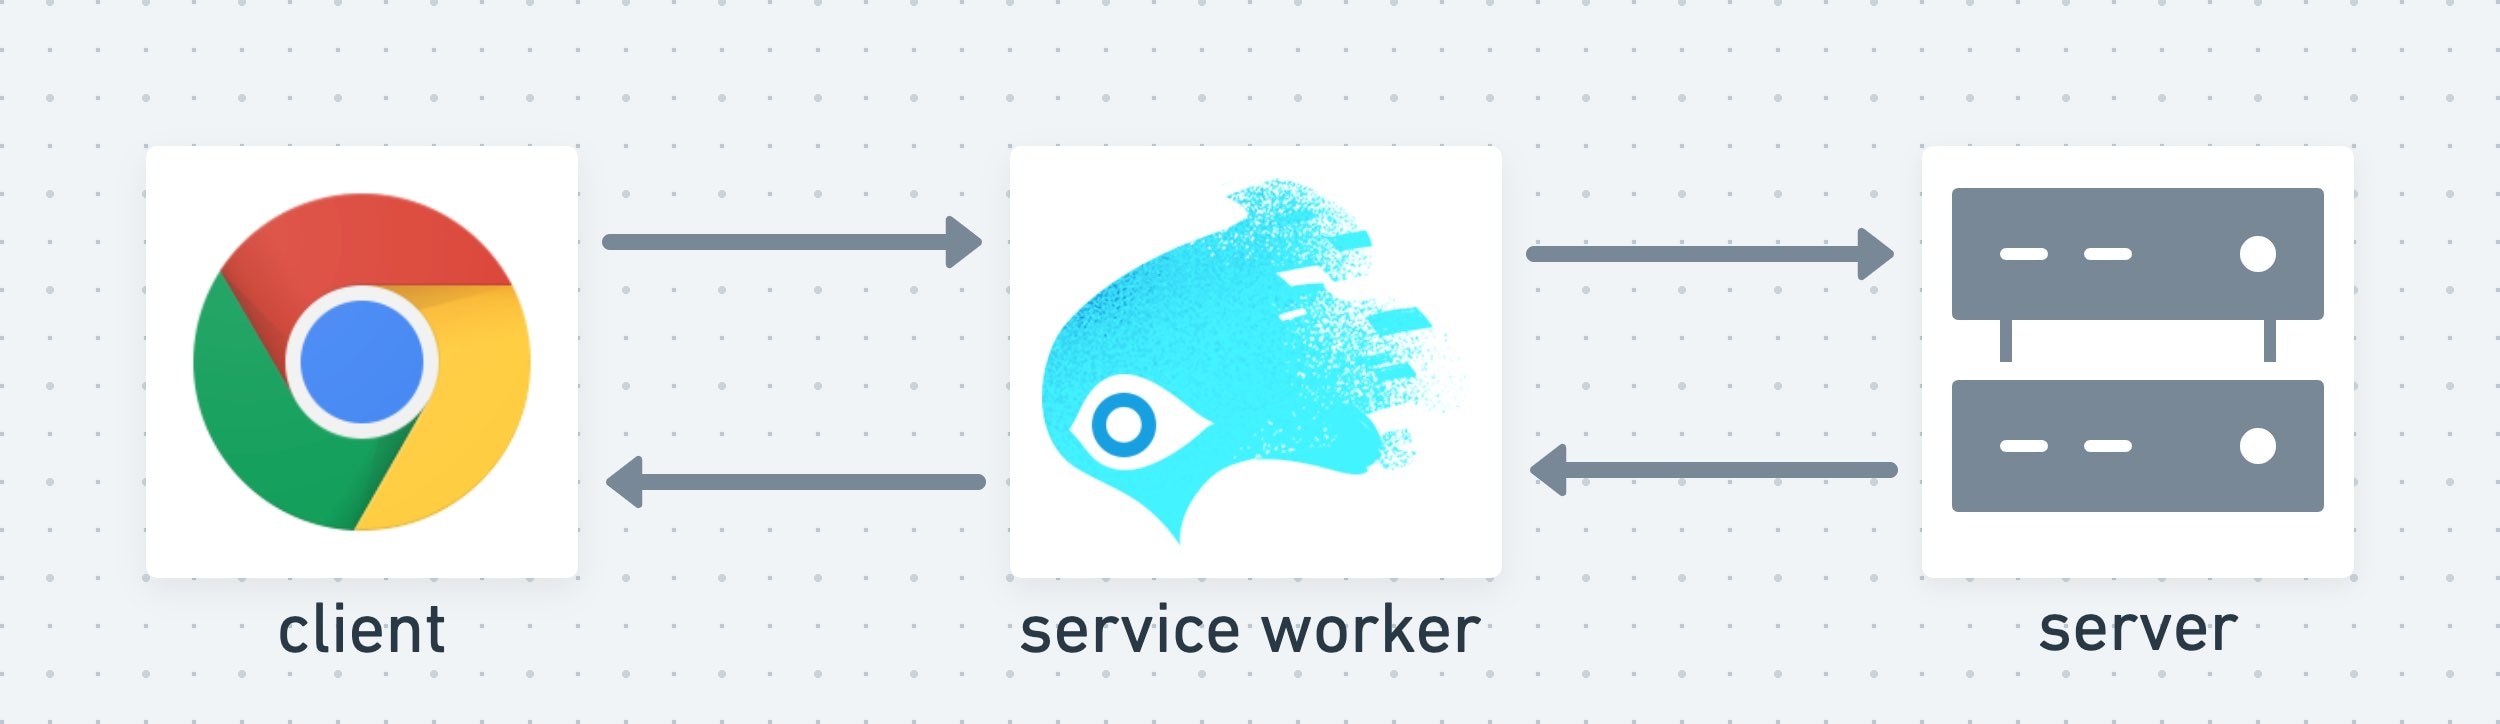 Service Worker 充当客户端和服务器之间的中间层